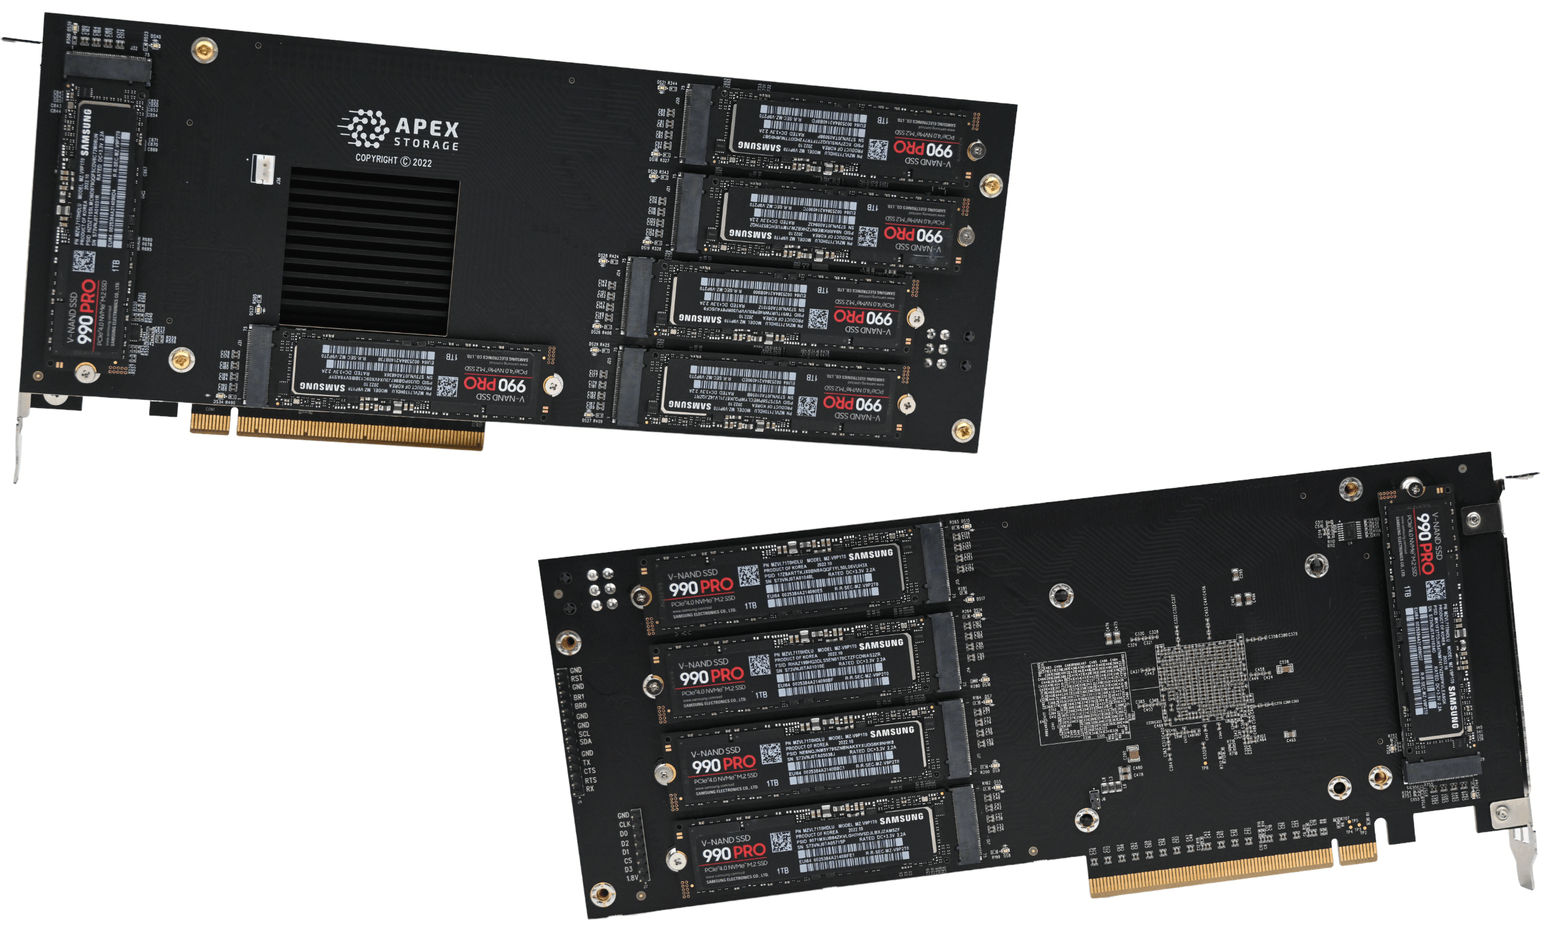 Apex Storage X16 AIC Lets You Add 16 NVMe Gen 4 SSDs In A Single-Slot Design